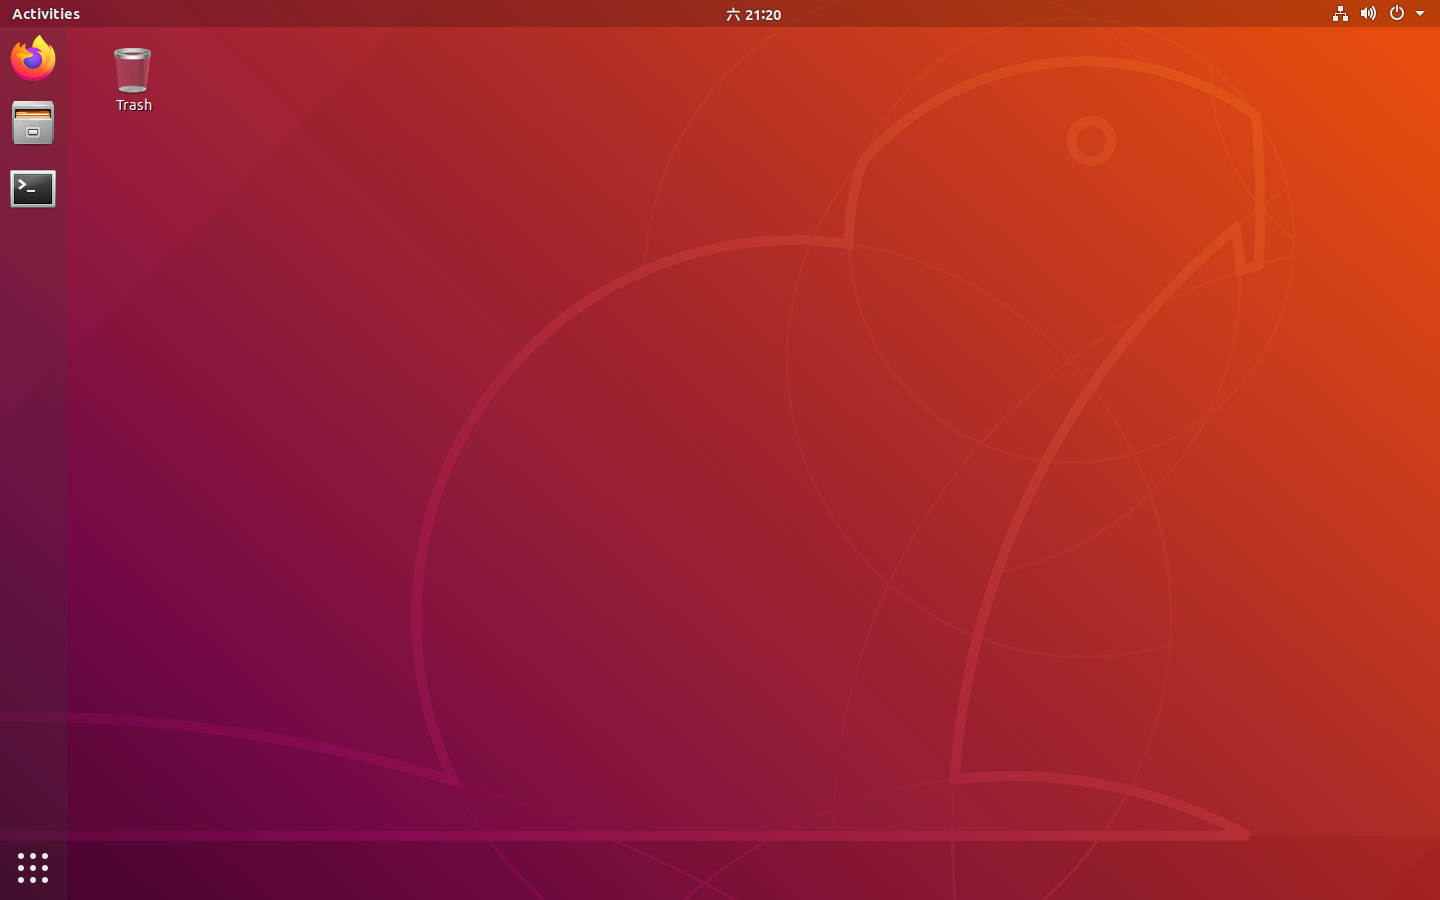 Ubuntu 18.04